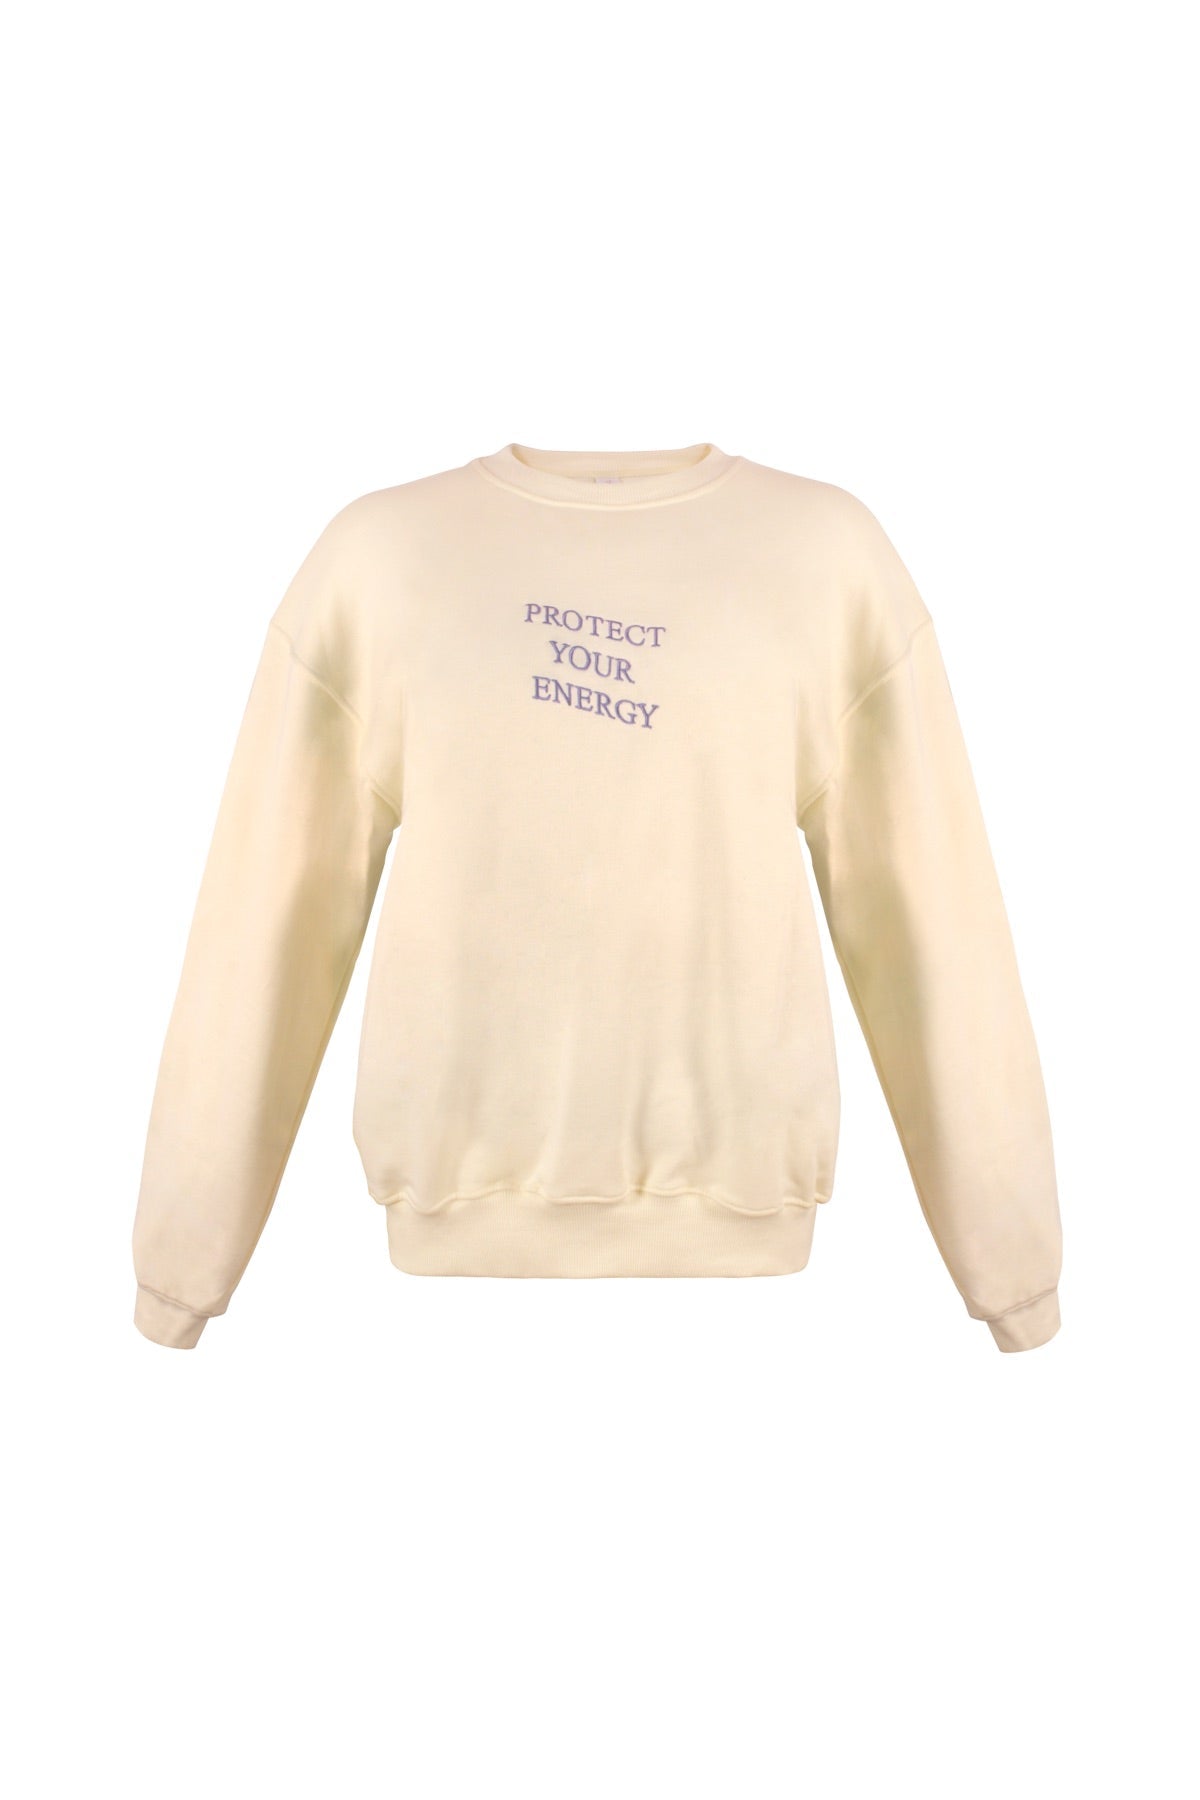 APPAREL - Protect Your Energy Sweatshirt (Bone)